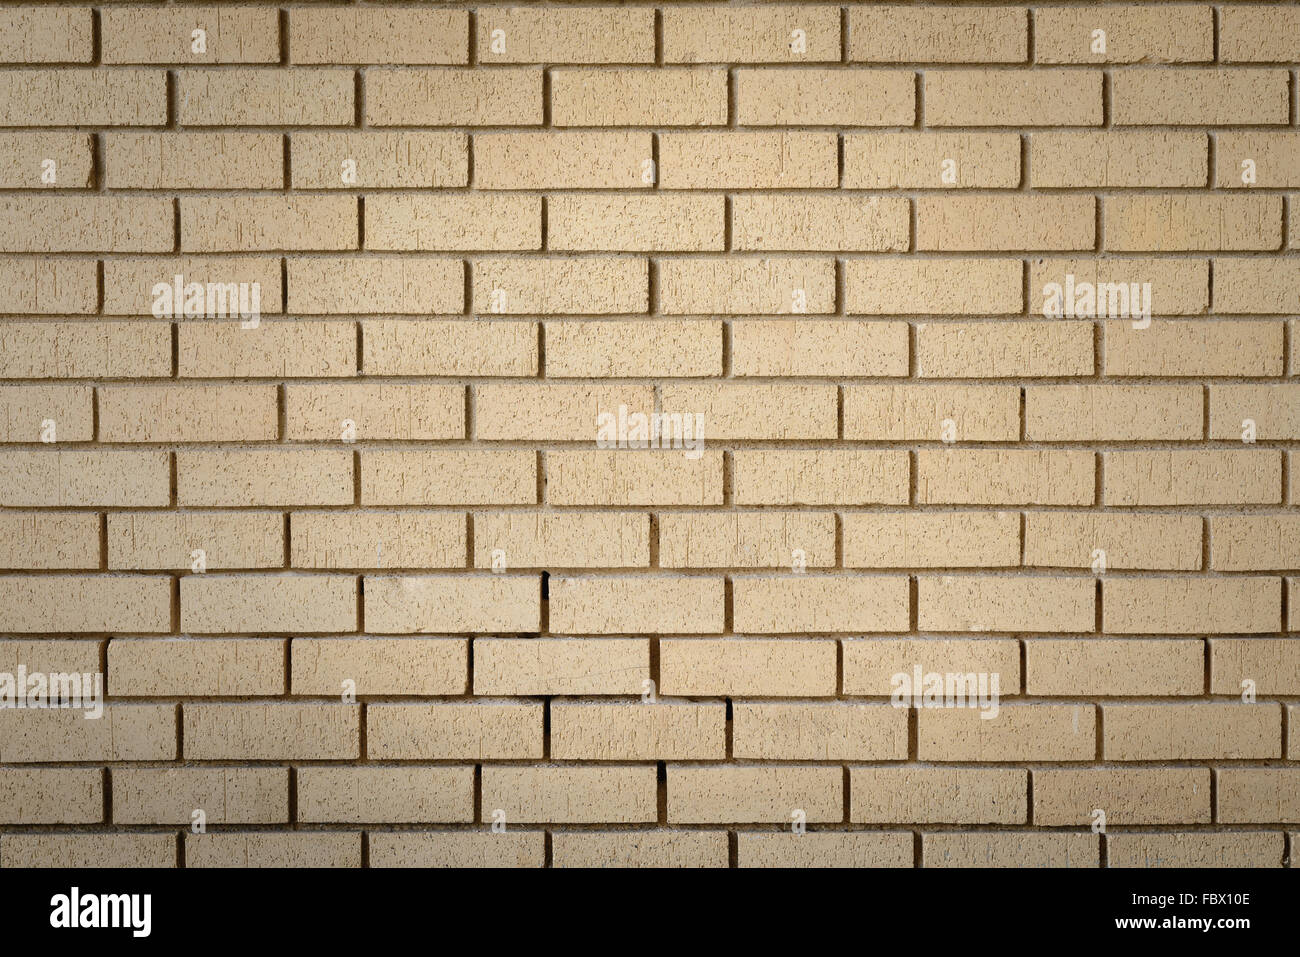 orange brick wall background pattern Stock Photo